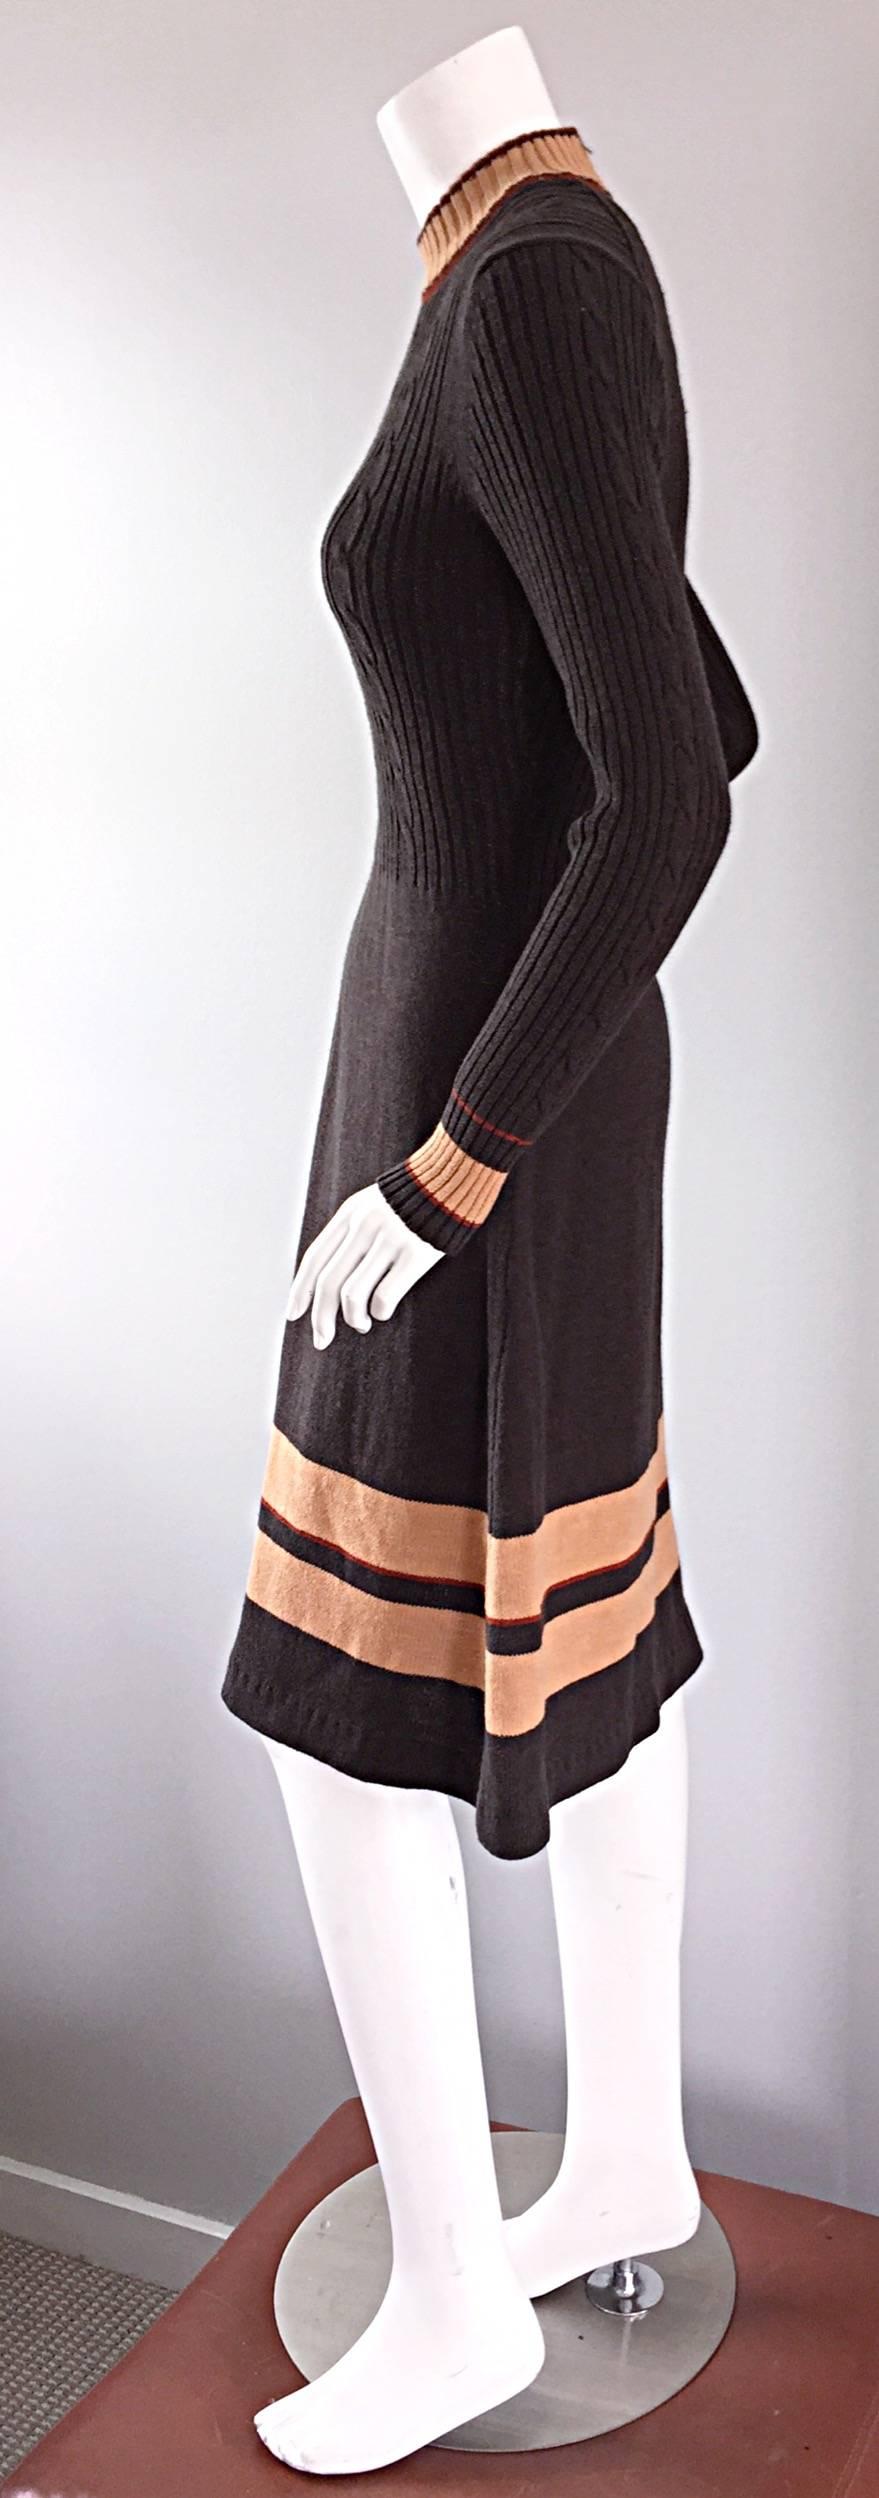 1960s sweater dress